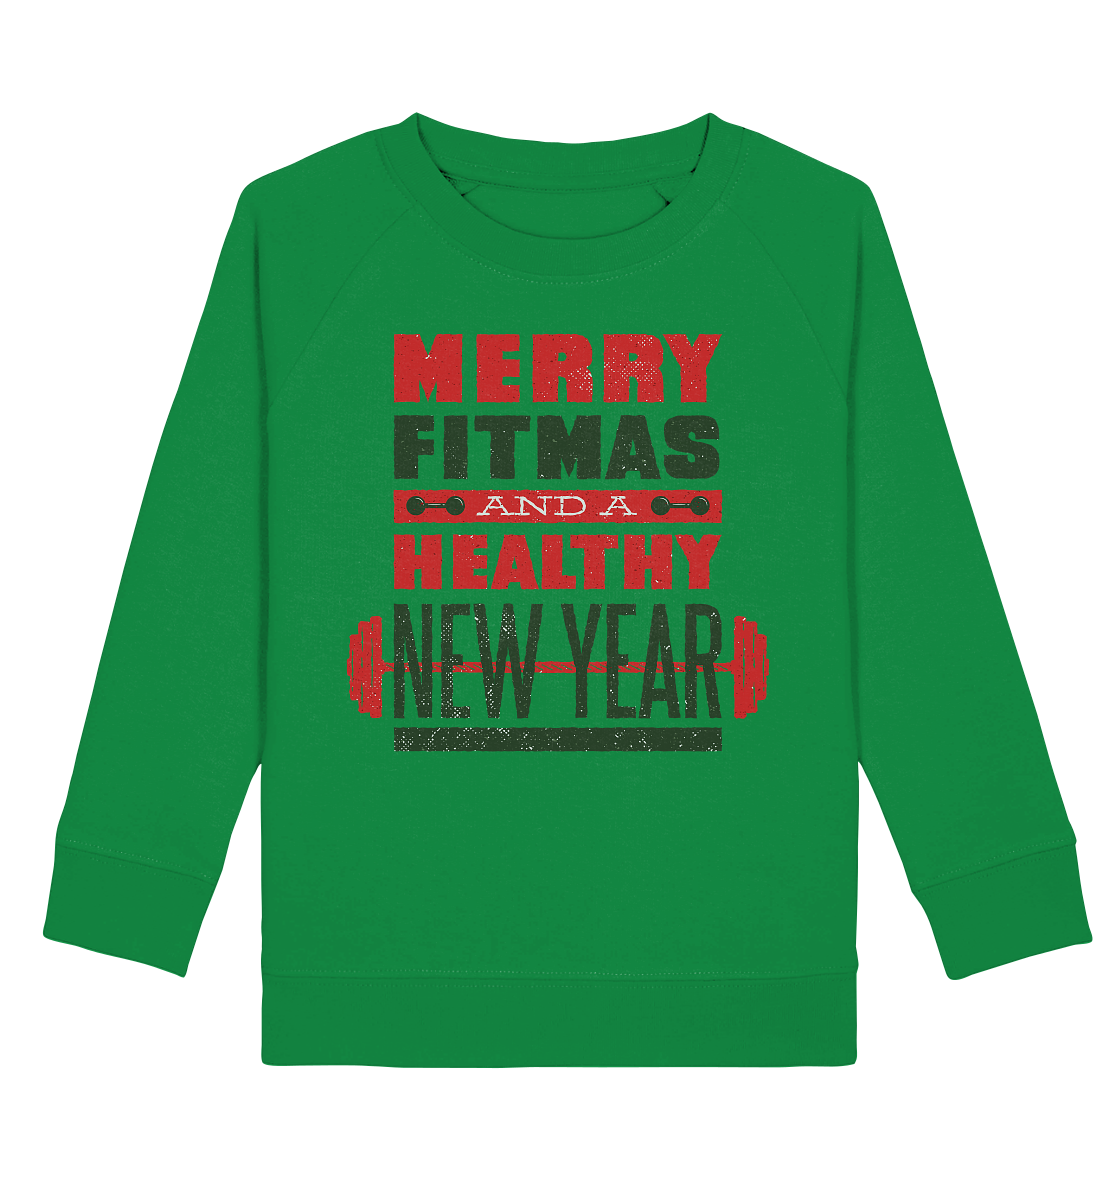 Weihnachtliches Design, Gym, Merry Fitmas and a Healthy New Year - Kids Organic Sweatshirt